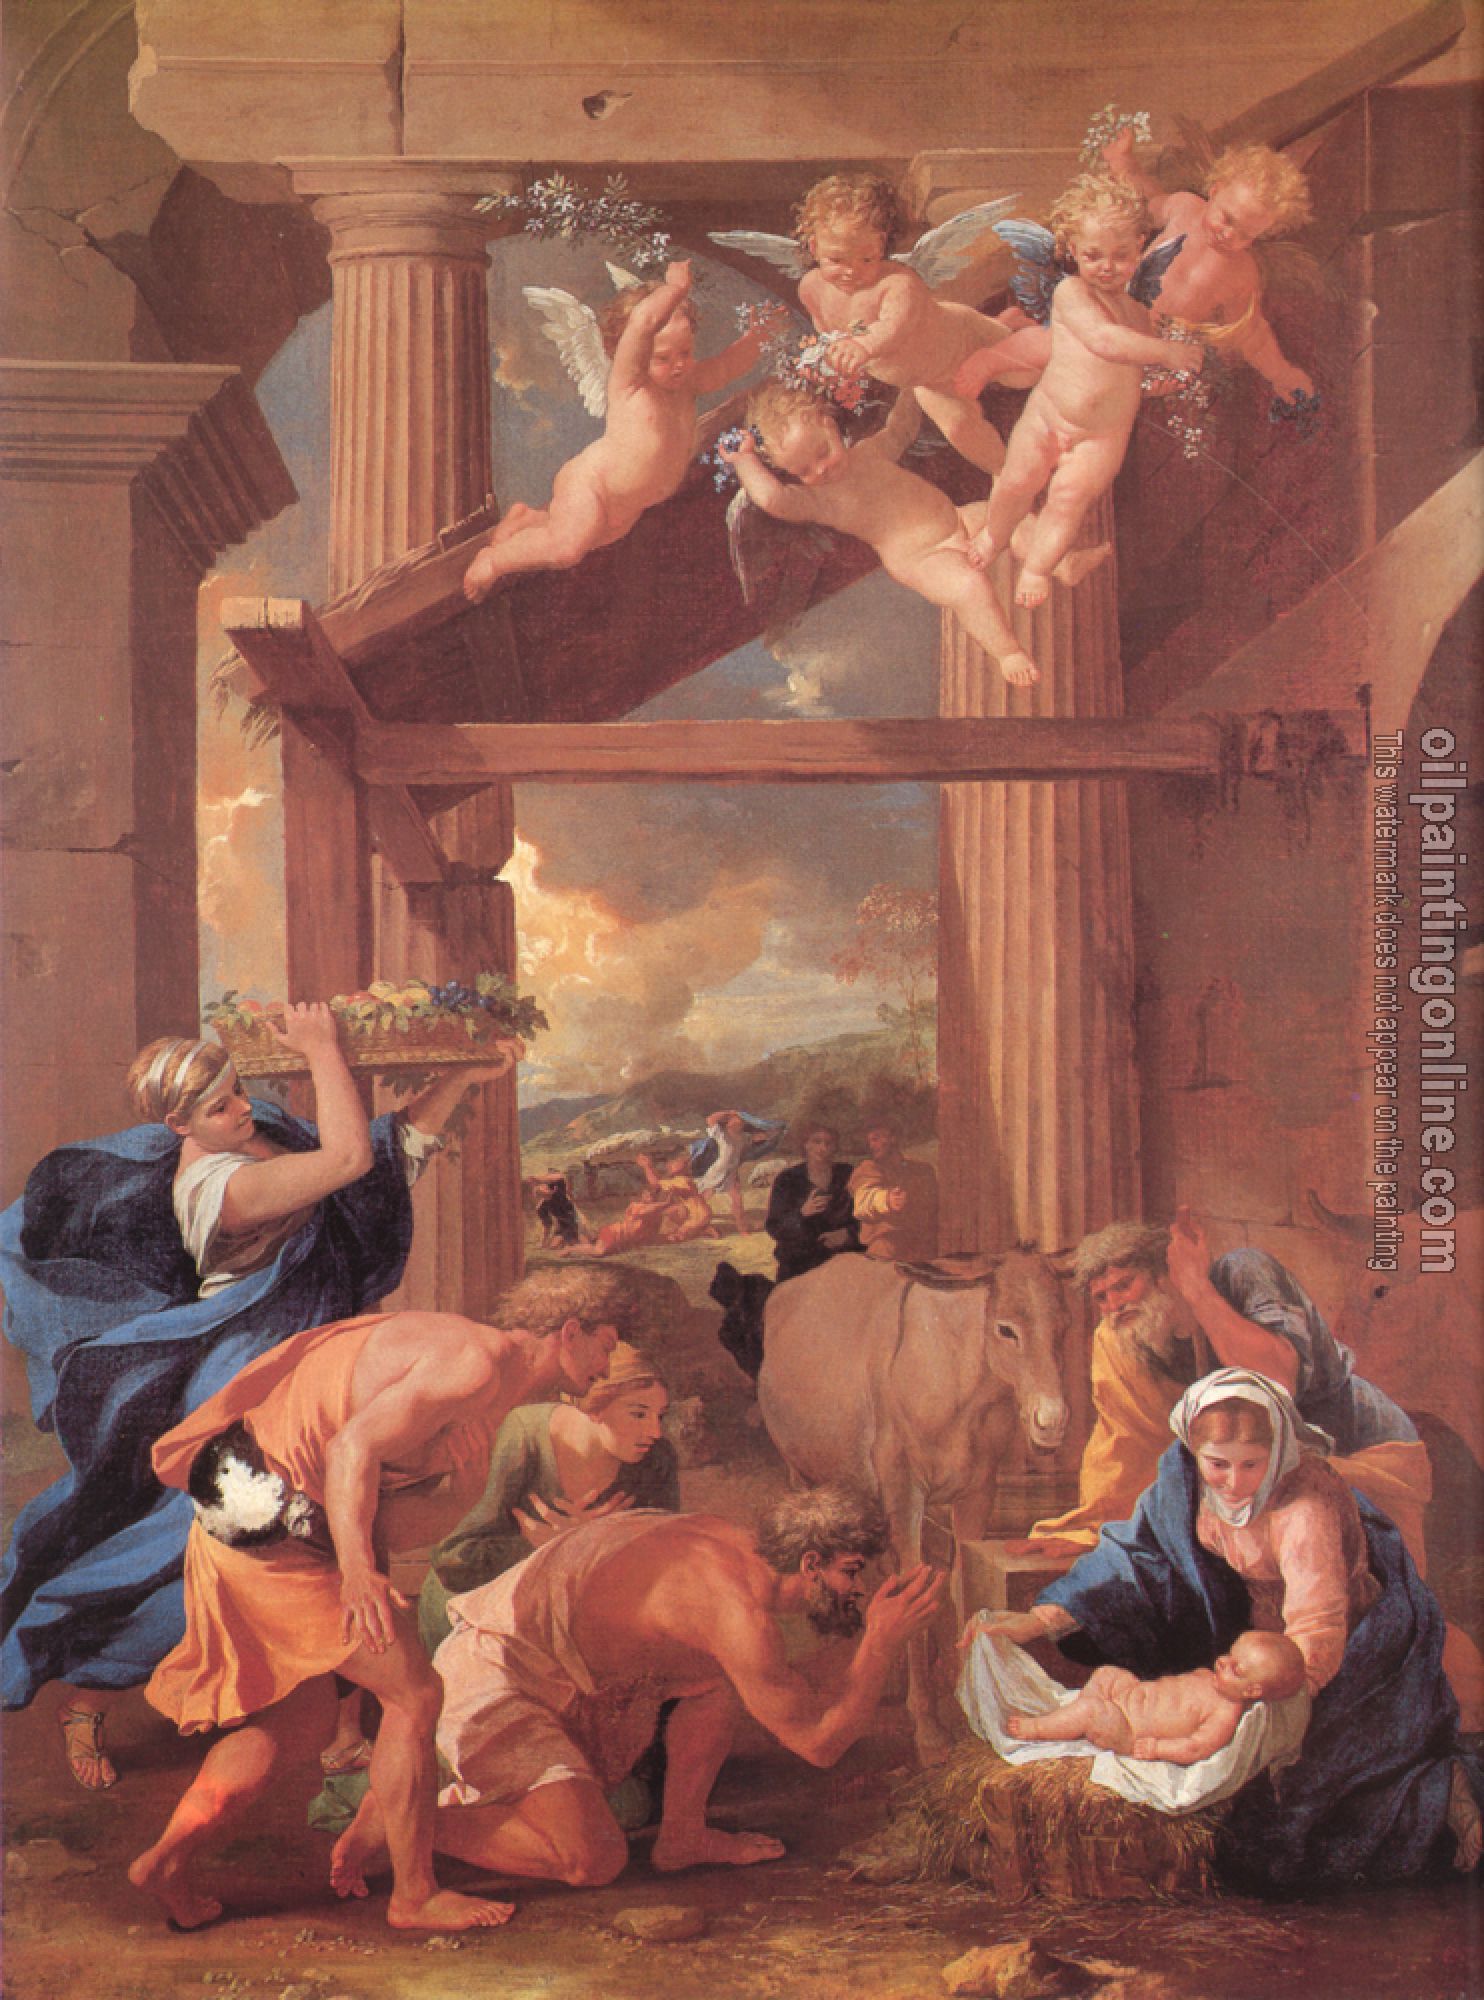 Poussin, Nicolas - The Adoration of the Shepherds